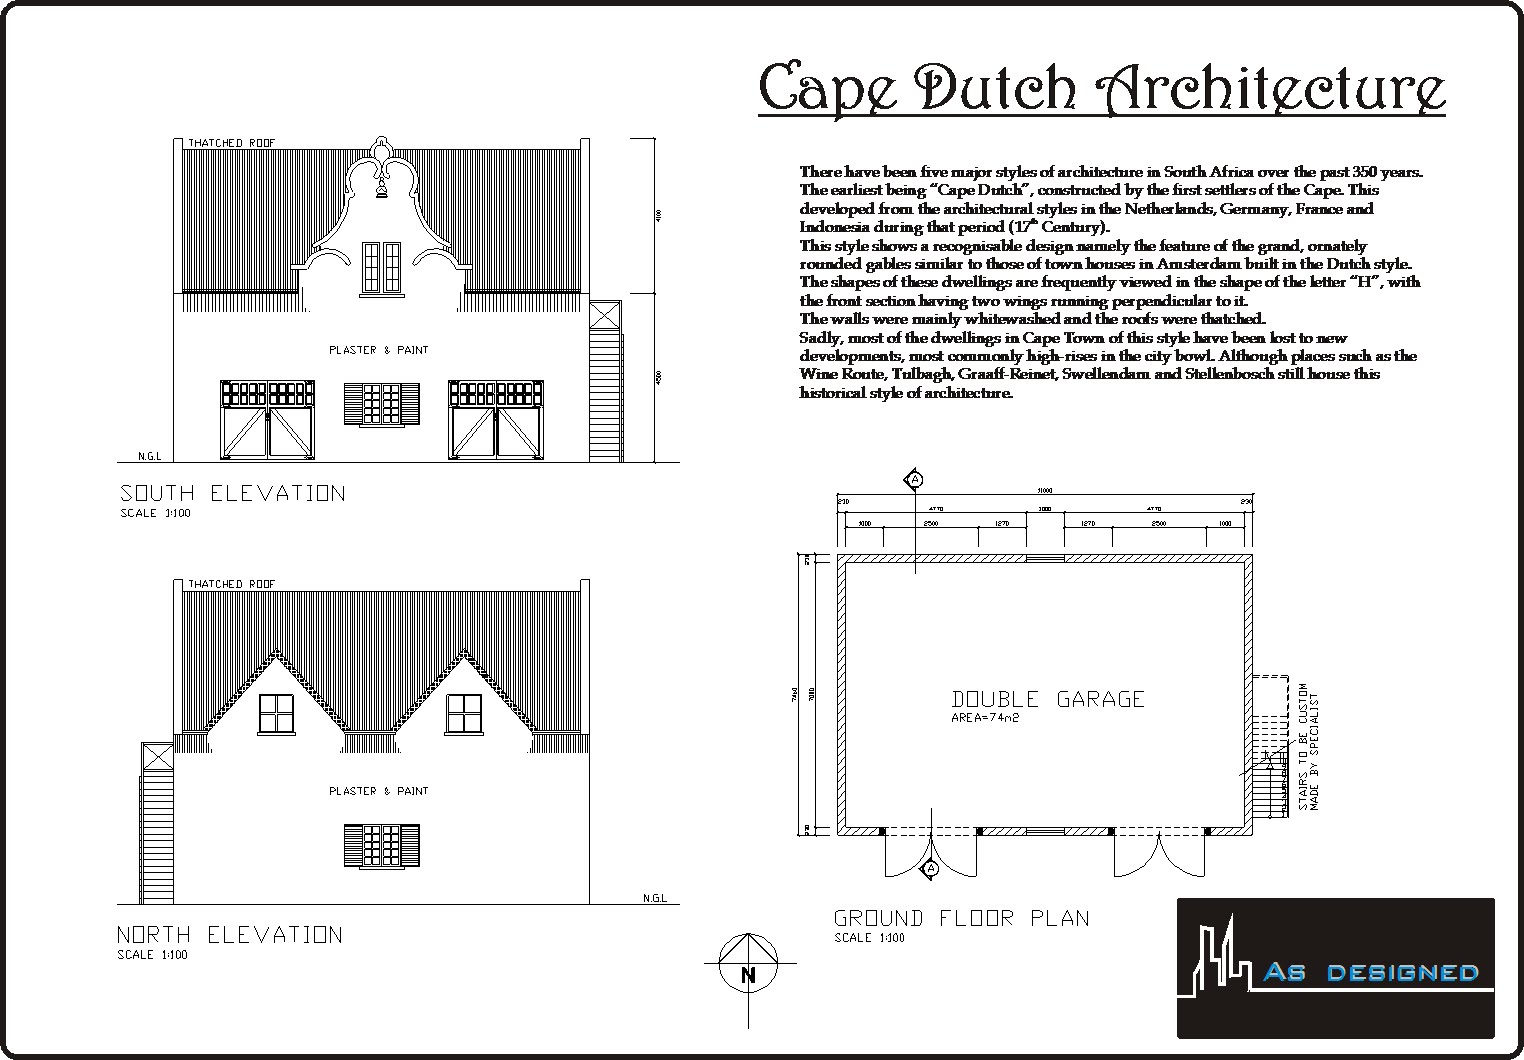 Download this Cape Dutch Architecture picture